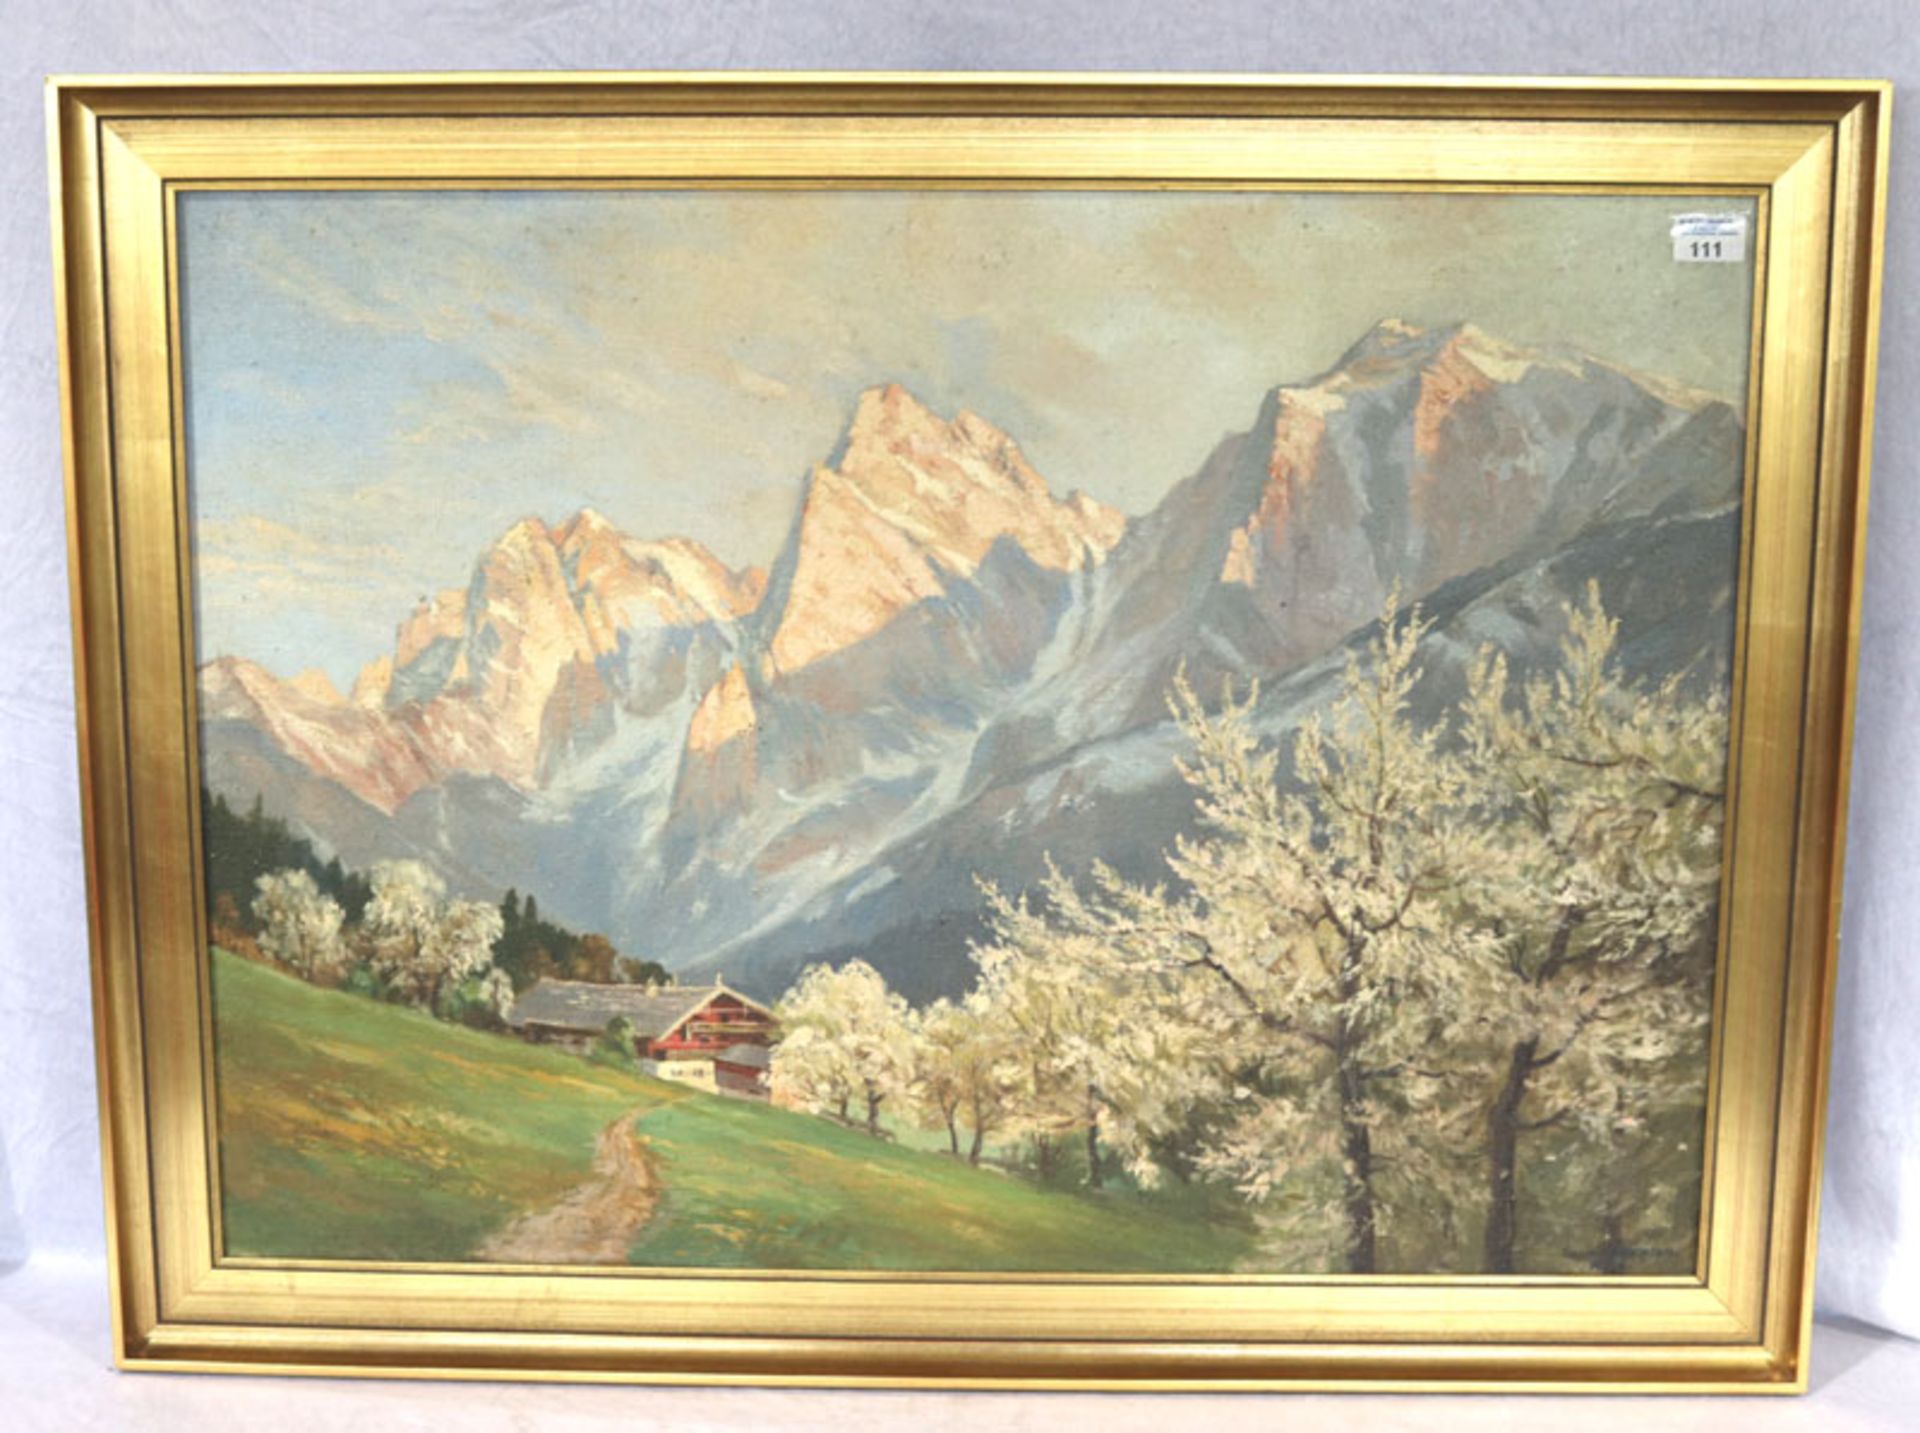 Gemälde ÖL/LW 'Wilder Kaiser im Frühjahr', Cop nach Compton, gerahmt, incl. Rahmen 72,5 cm x 96 cm